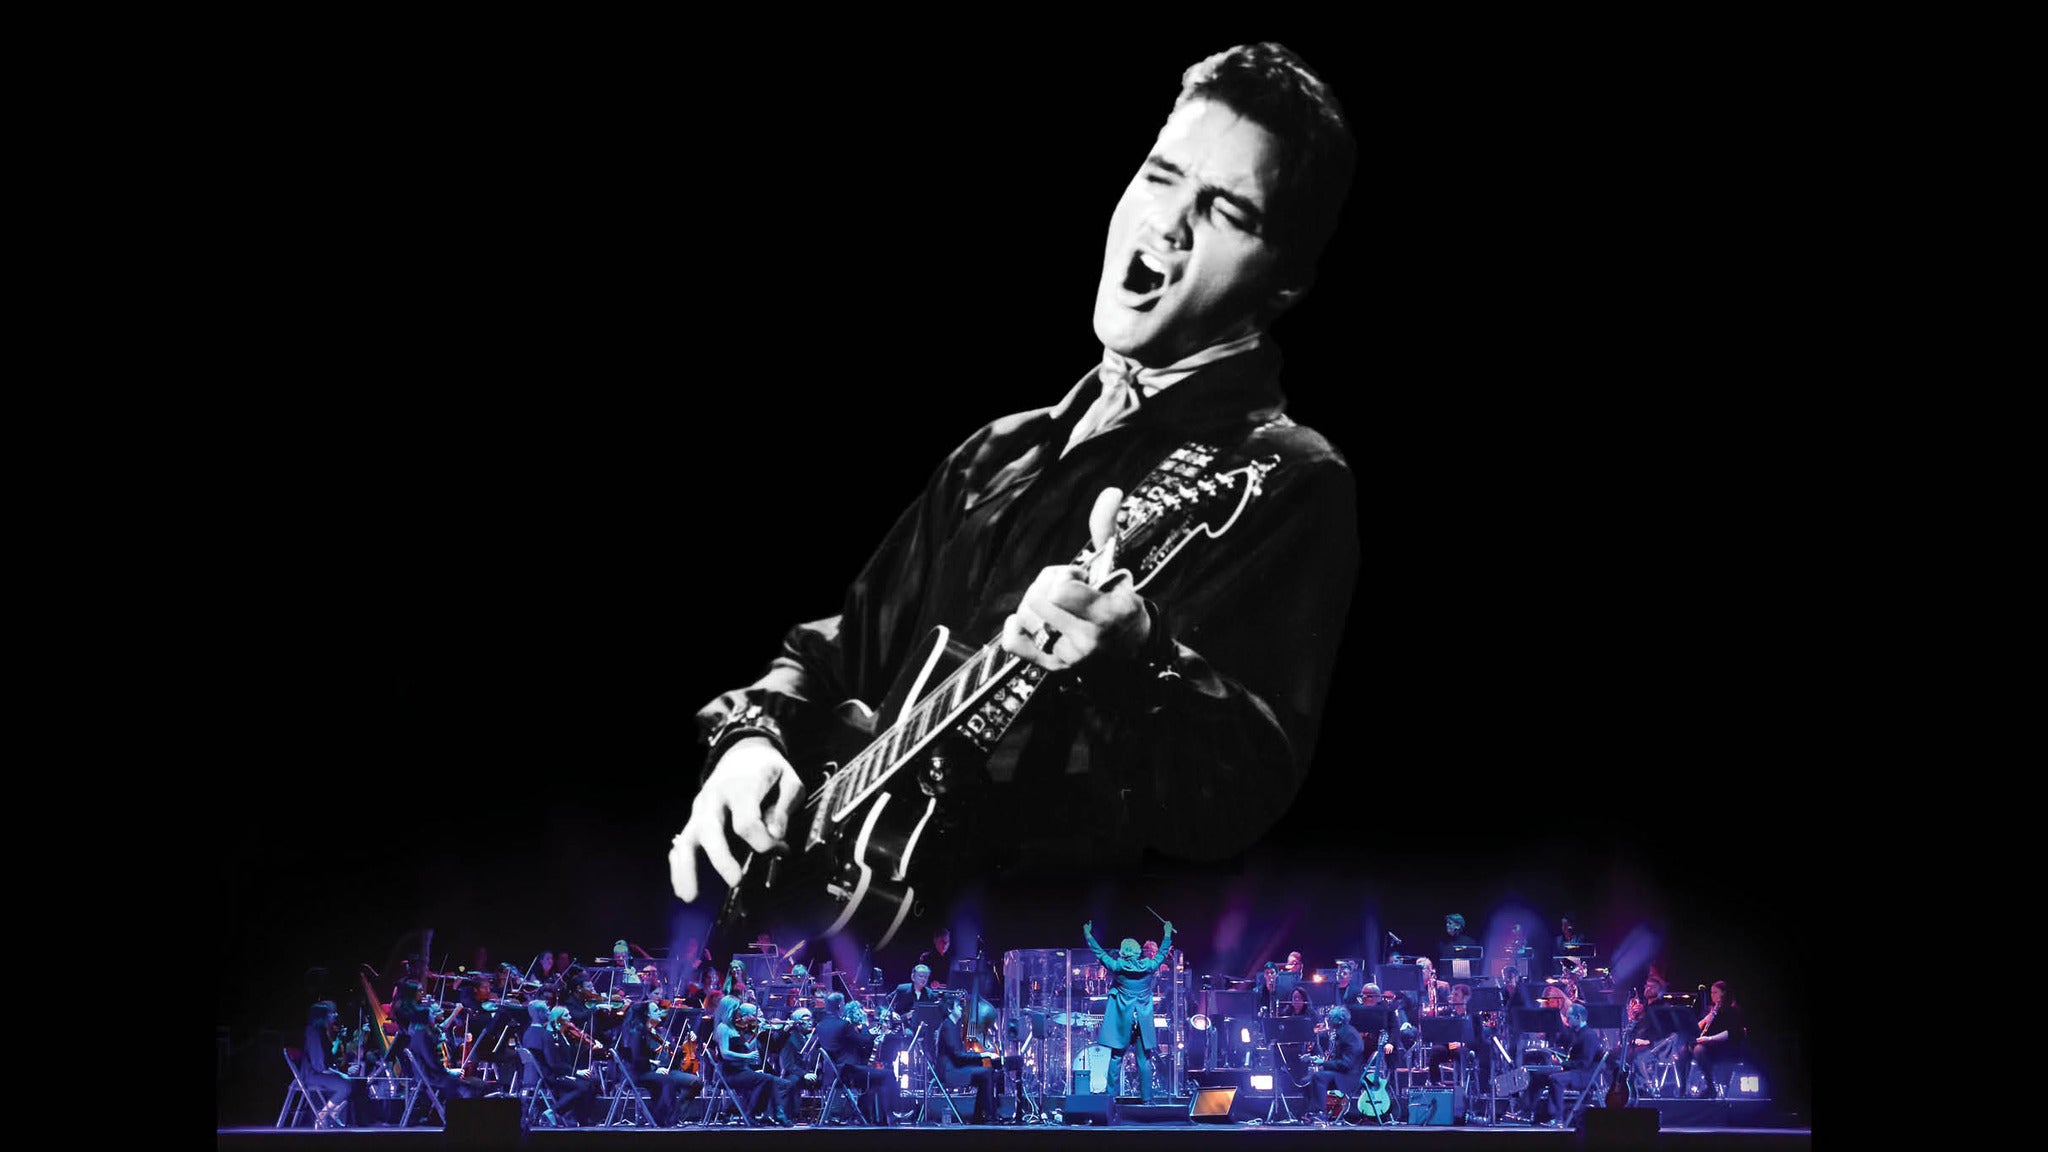 Graceland Presents Elvis Live In Concert in Montclair promo photo for Citi® Cardmember presale offer code